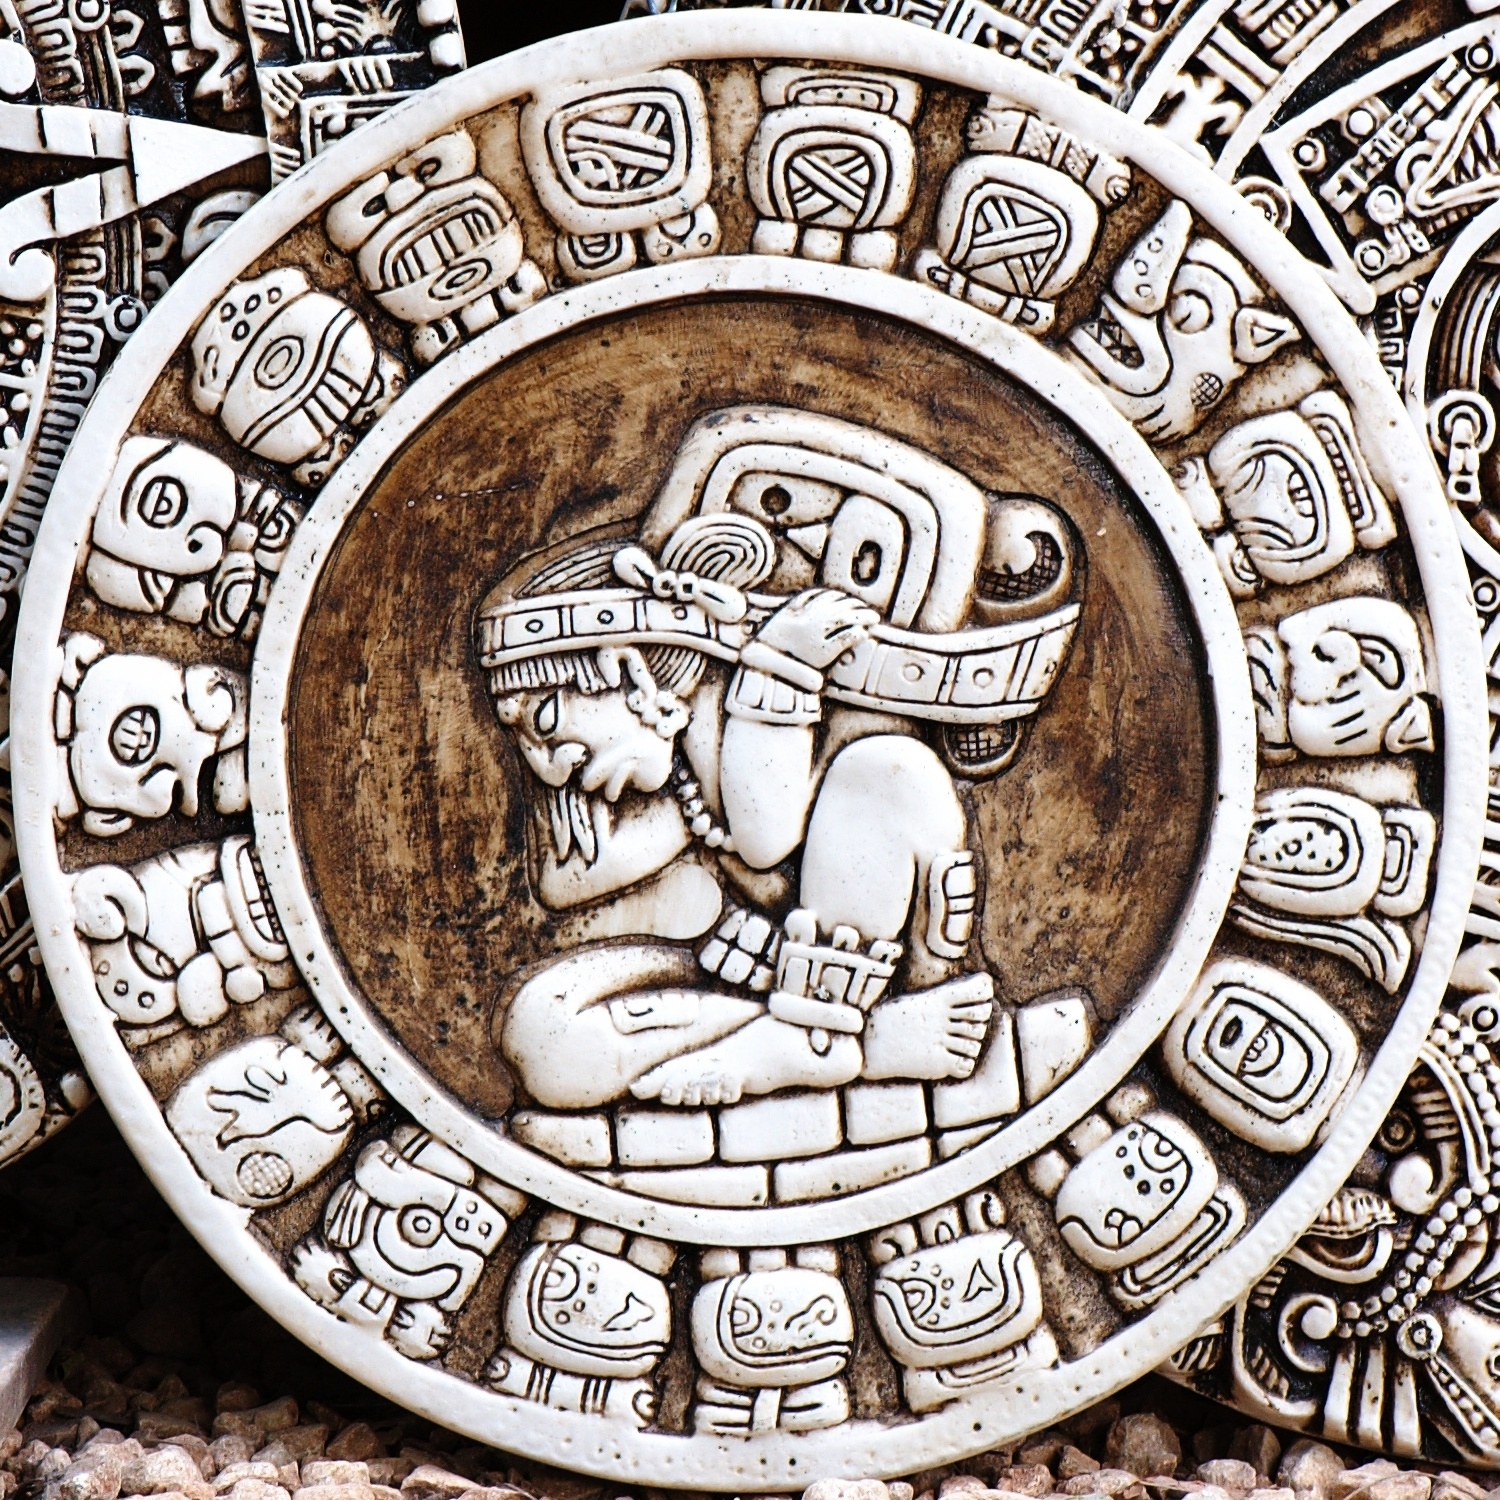 2012 Phenomenon - Wikiquote with regard to Mayans Calendar End Of World